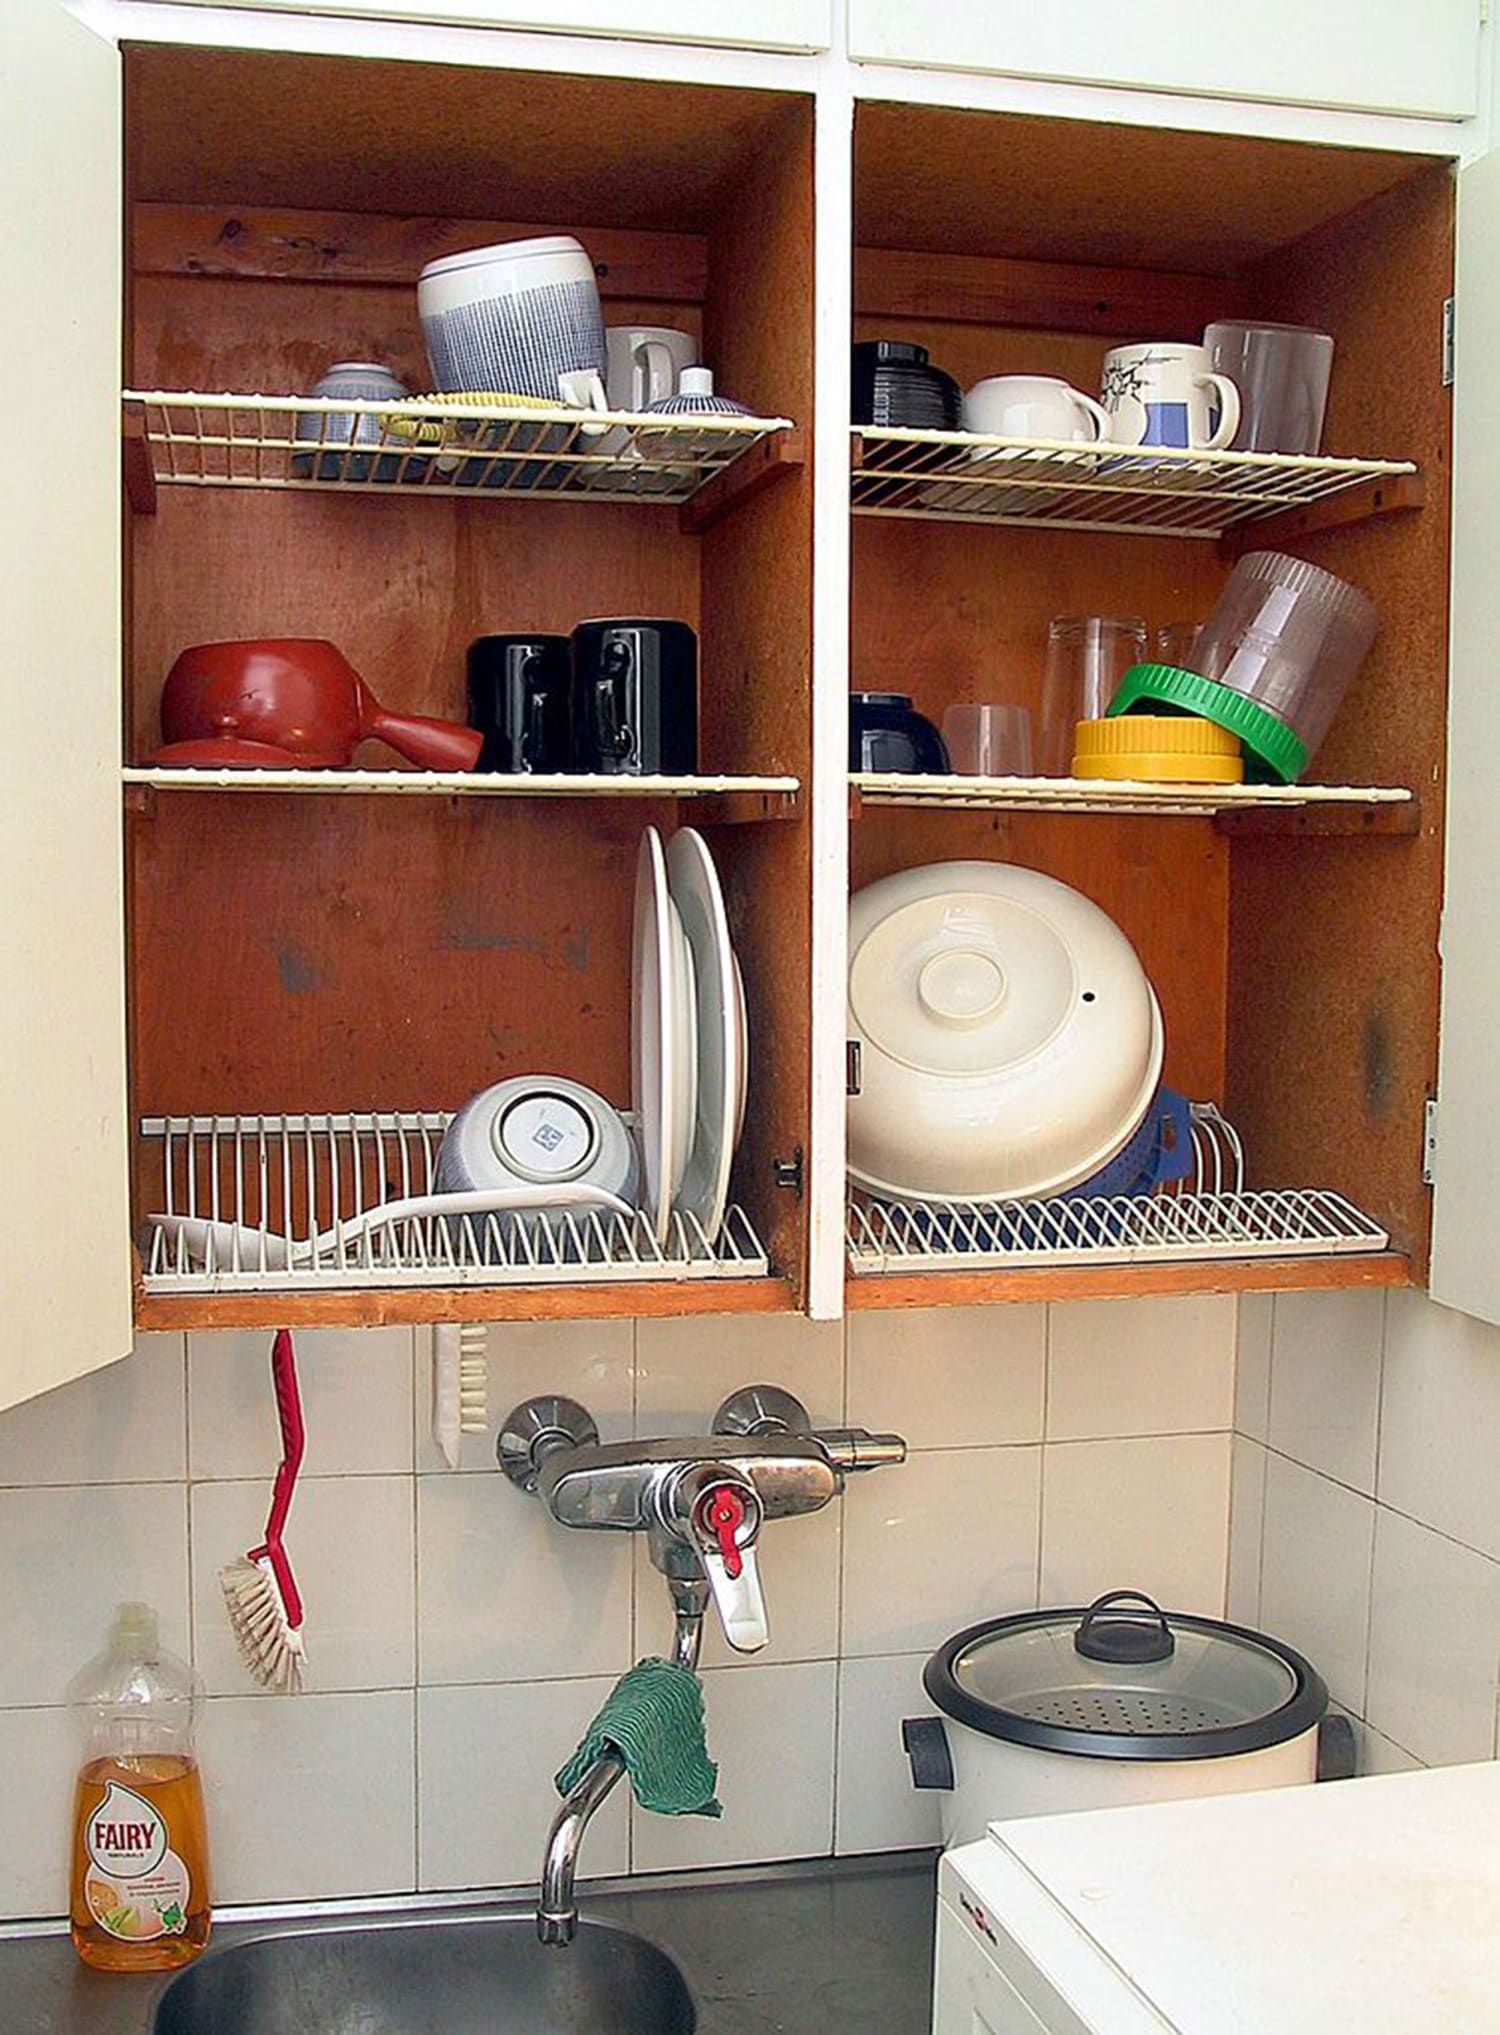 Drying Racks Above Sink Inside Kitchen Cabinet. Hidden Cabinet